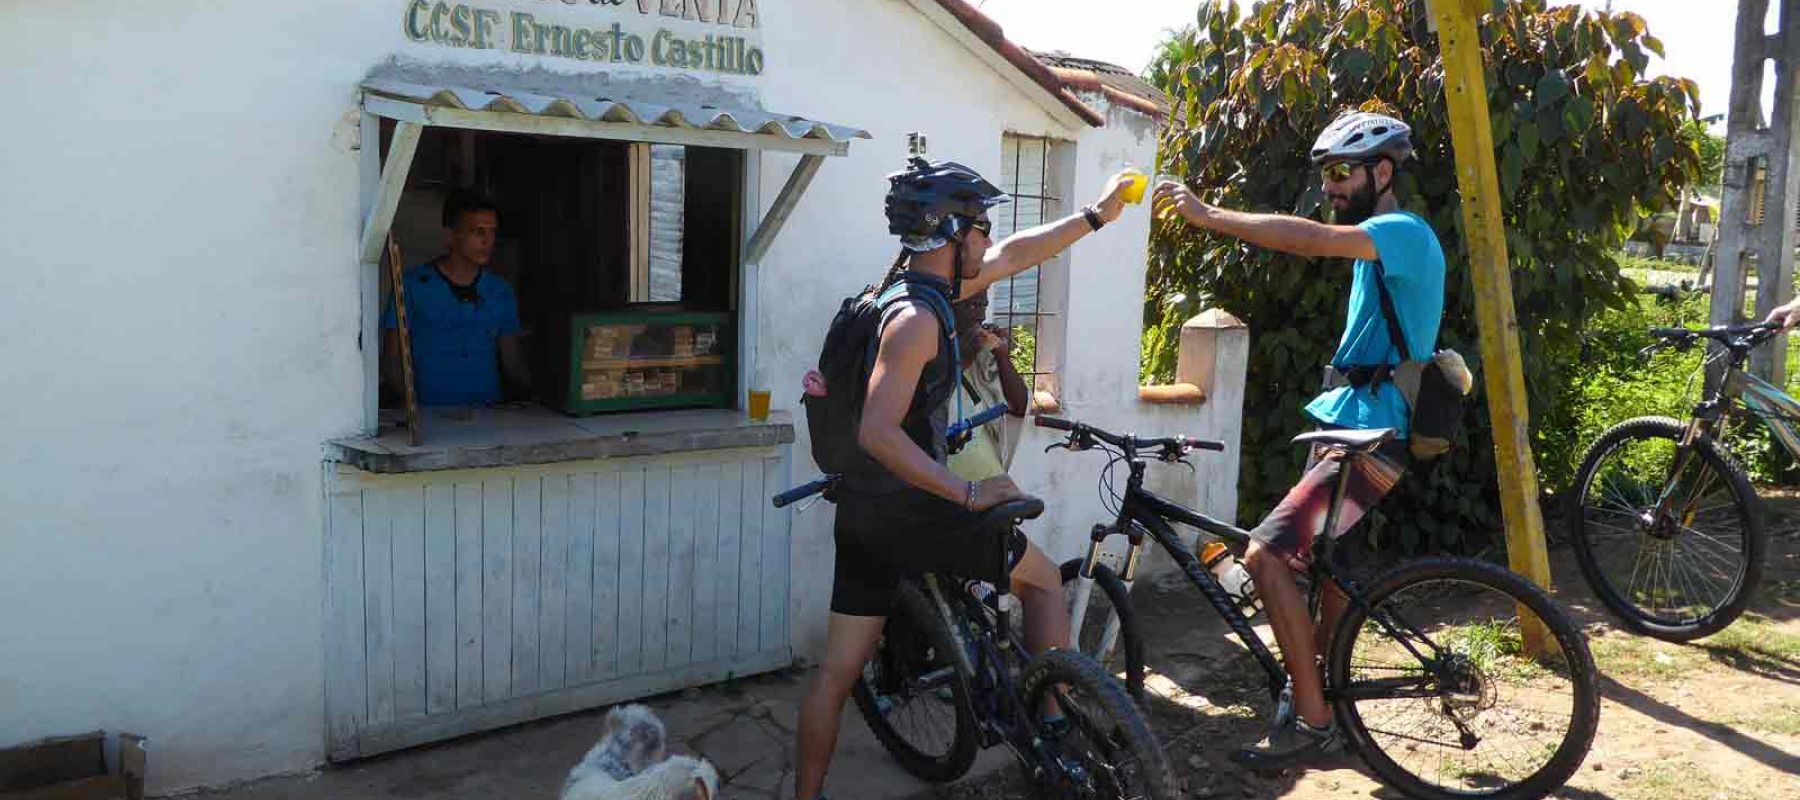 Biking through cuba village